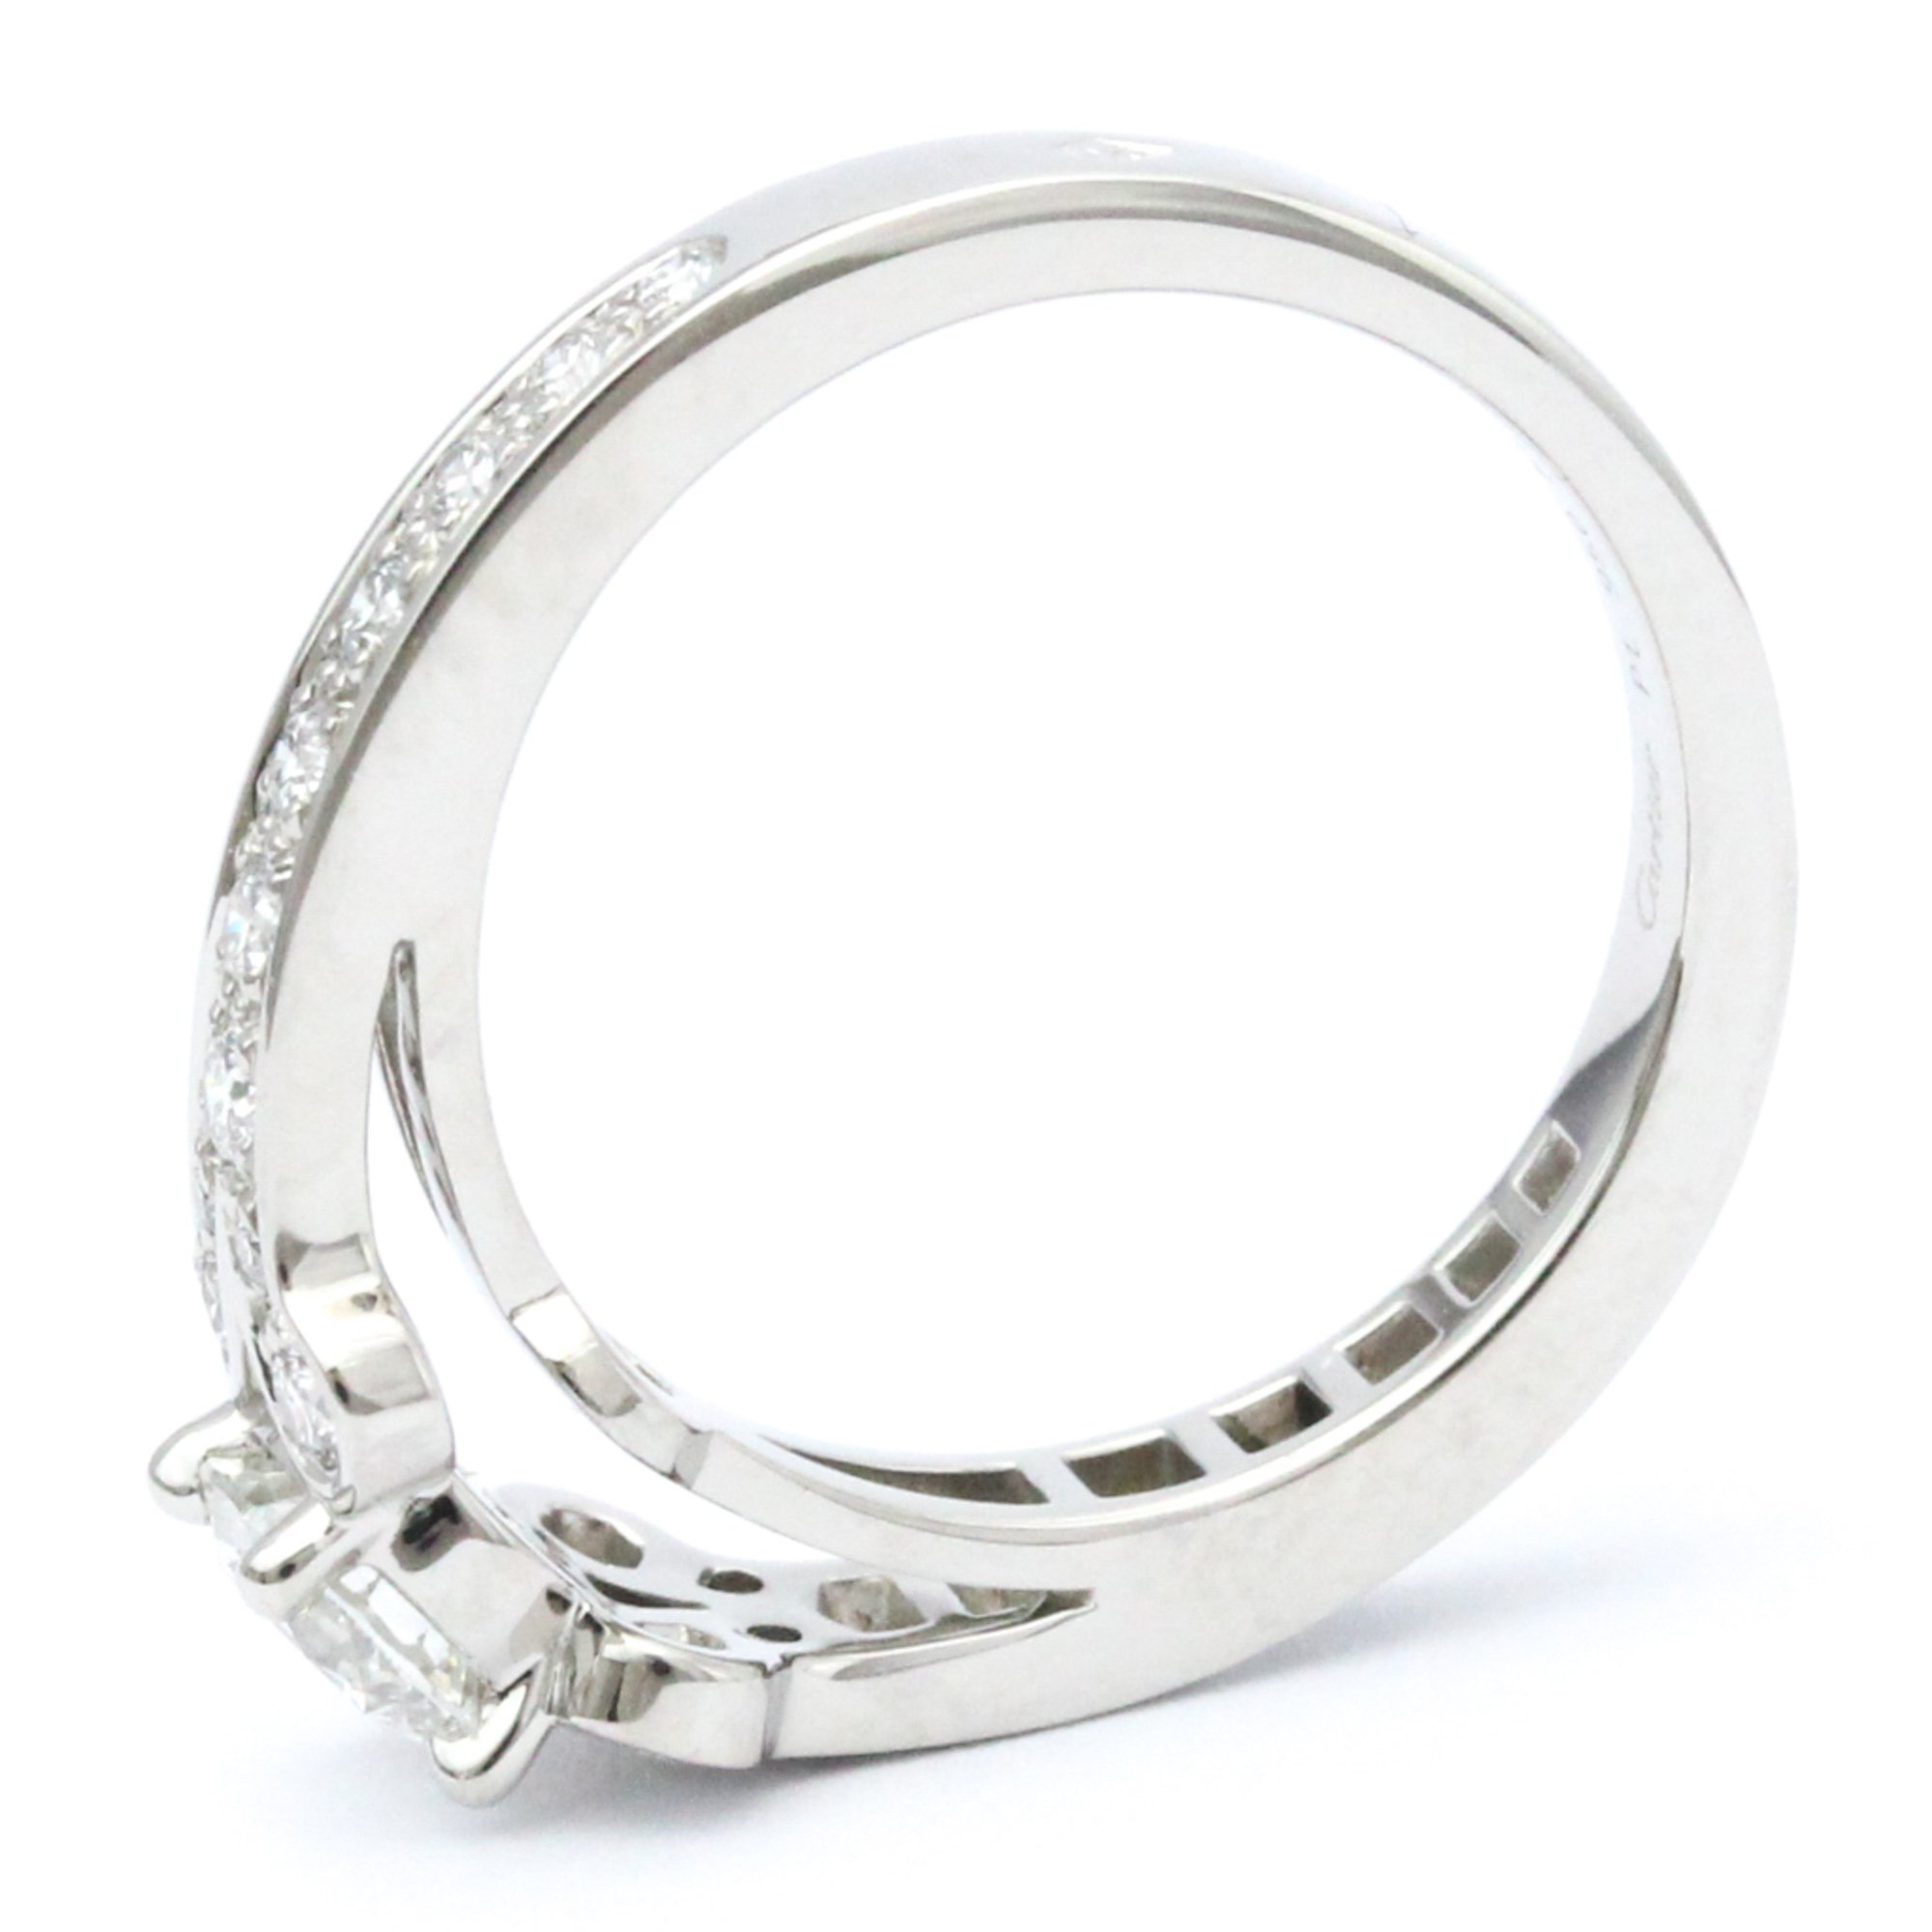 Cartier Ballerina Solitaire Ring Platinum Fashion Diamond Band Ring Carat/0.51 Silver